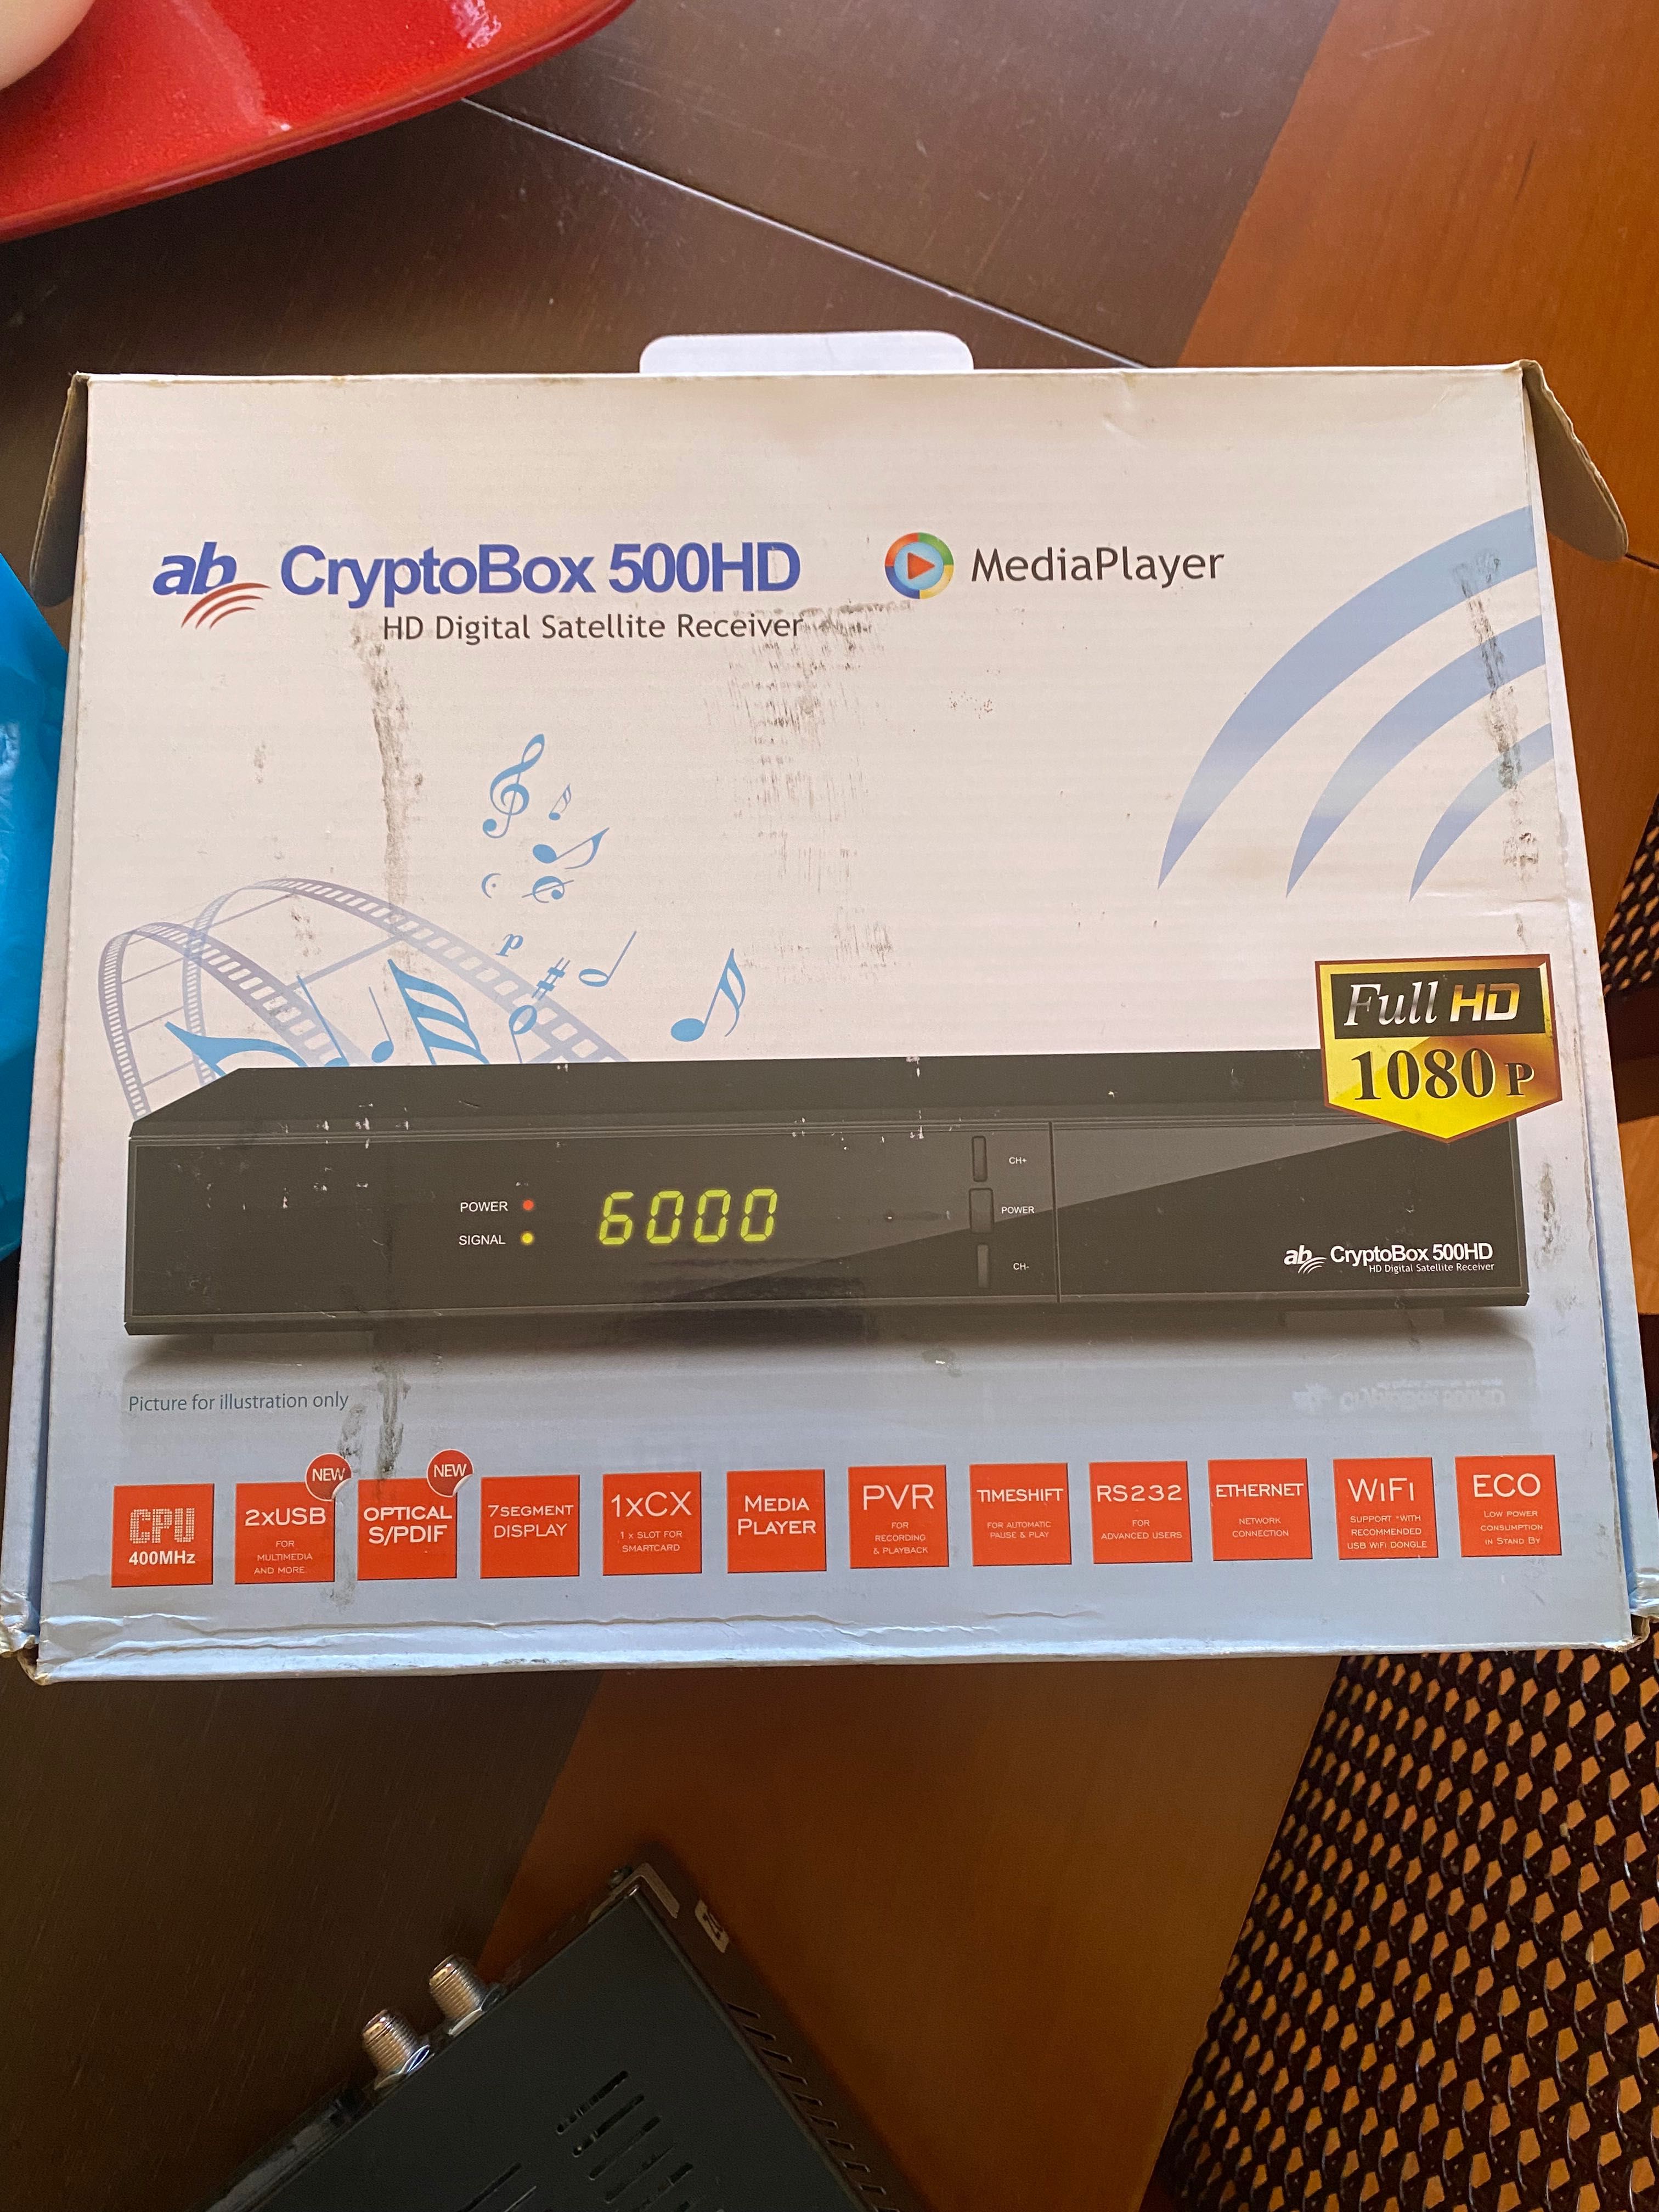 AB CryptoBox 500